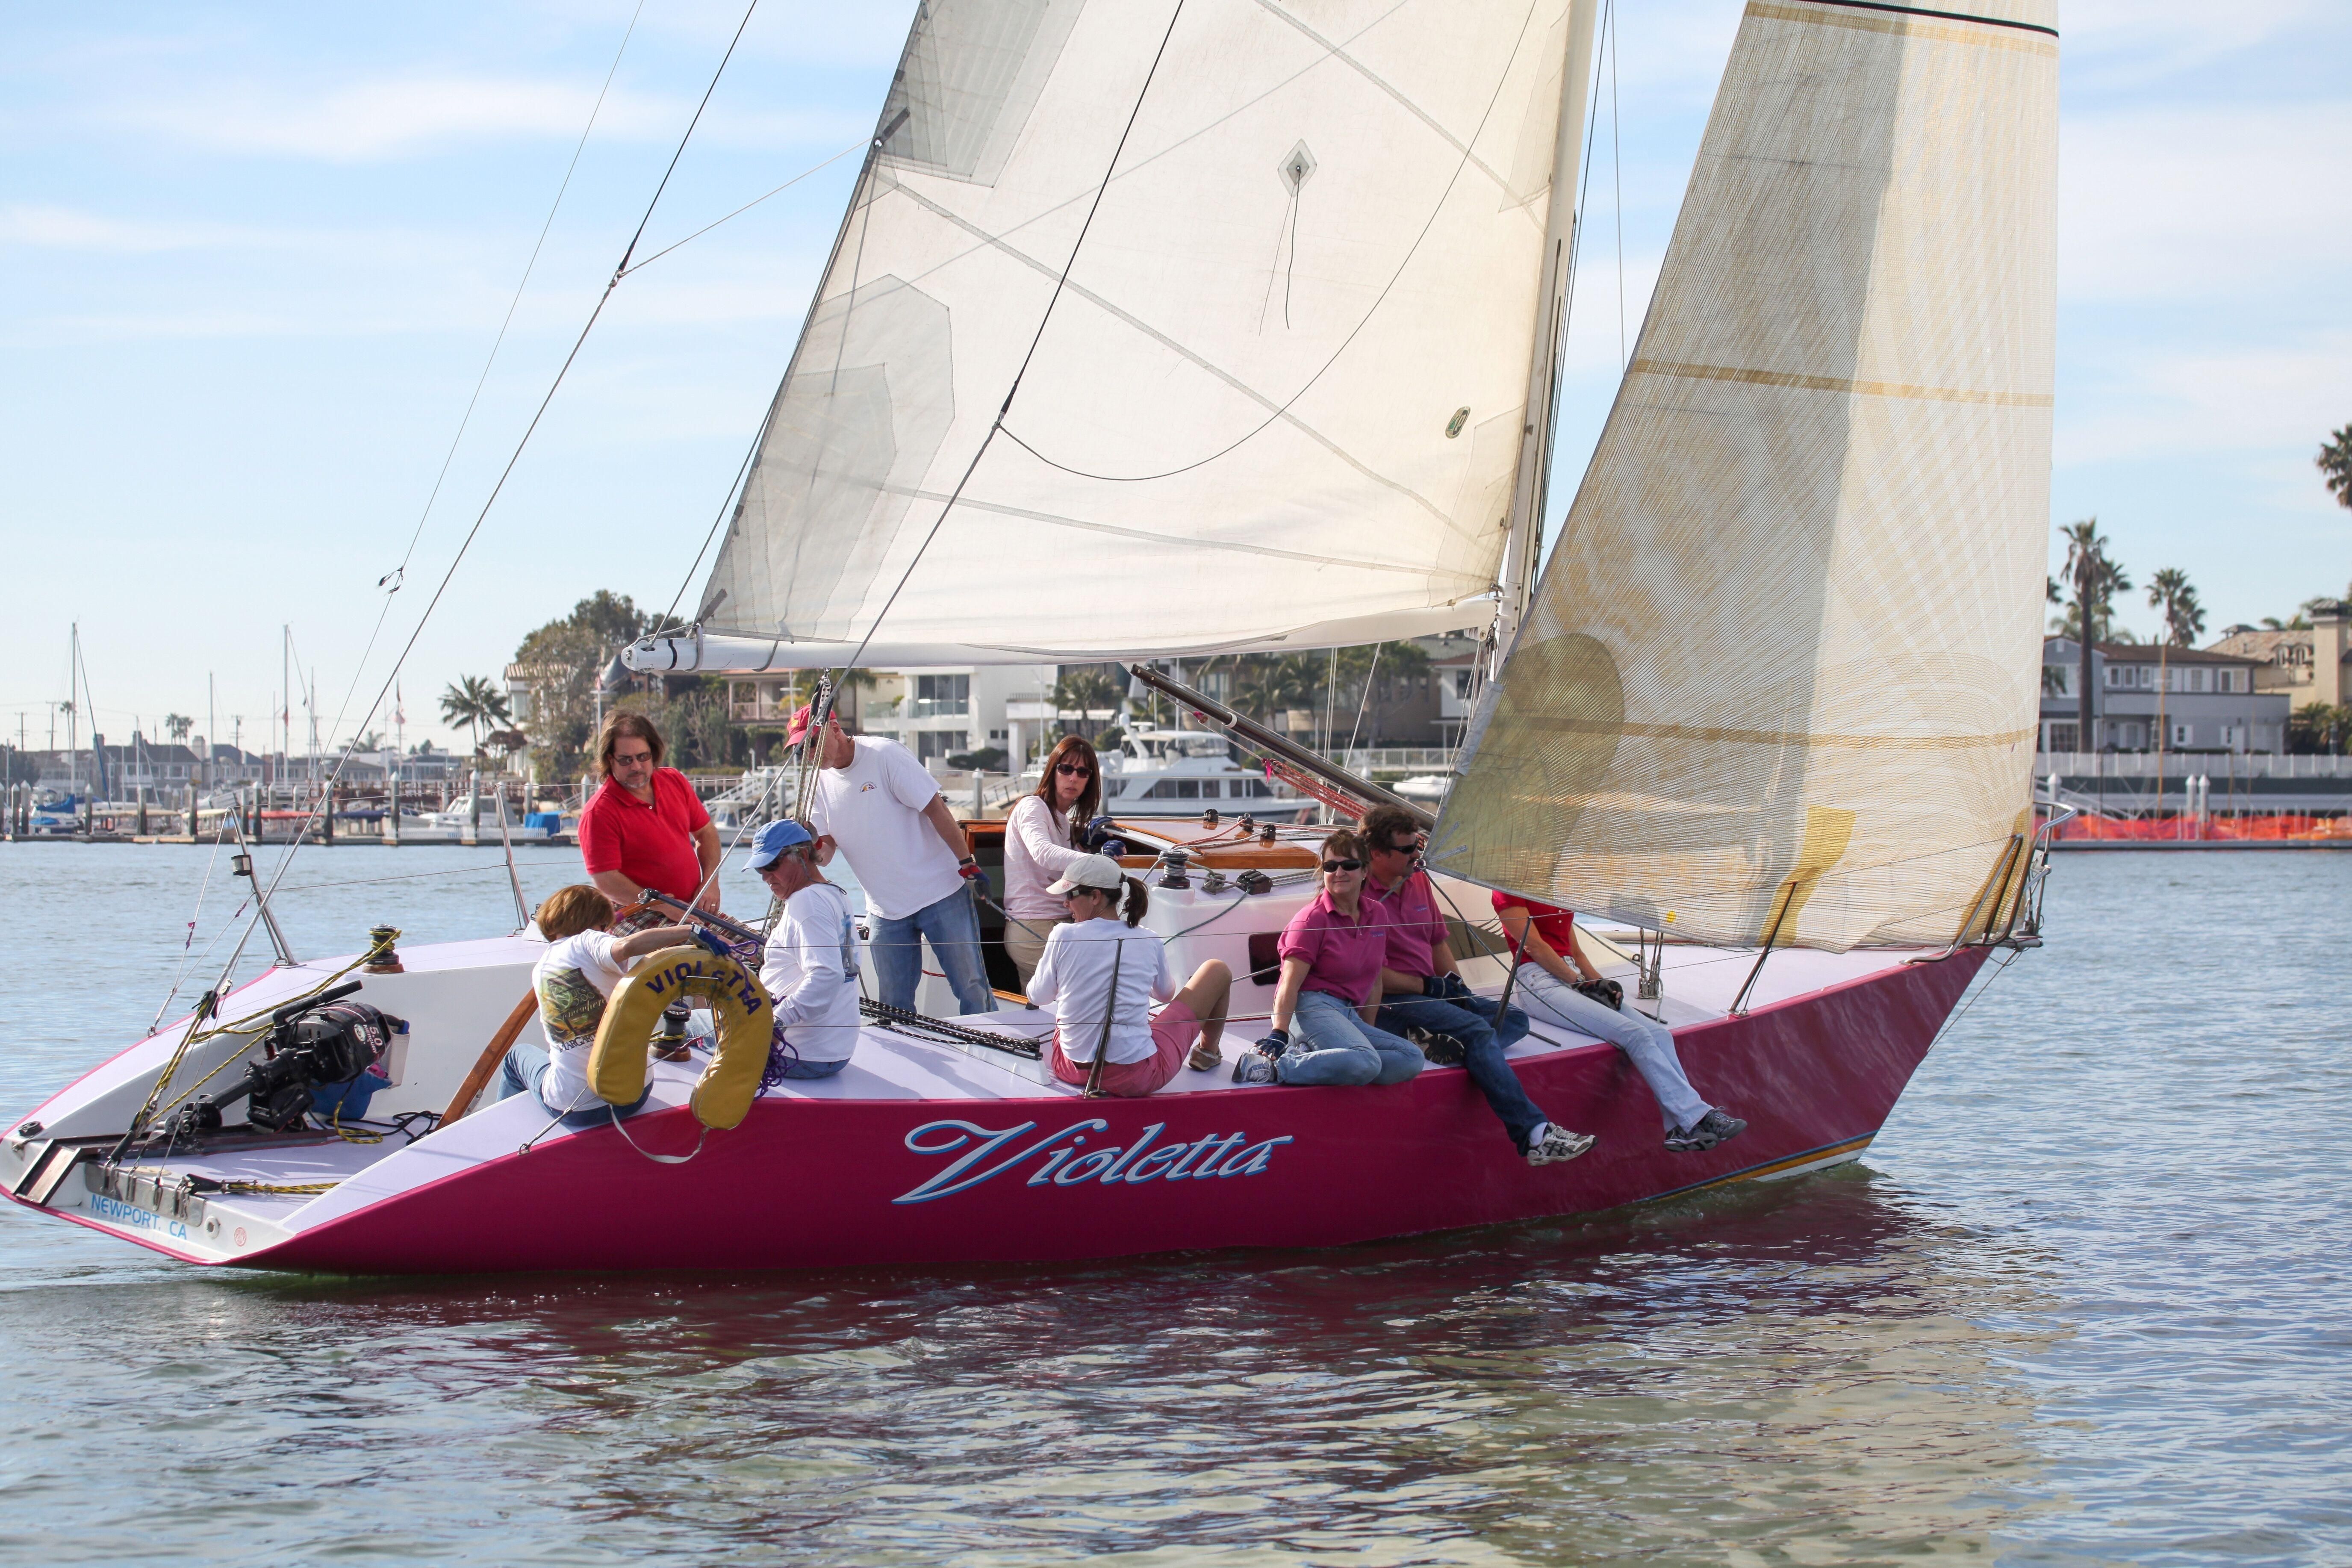 racing sloop sailboats for sale